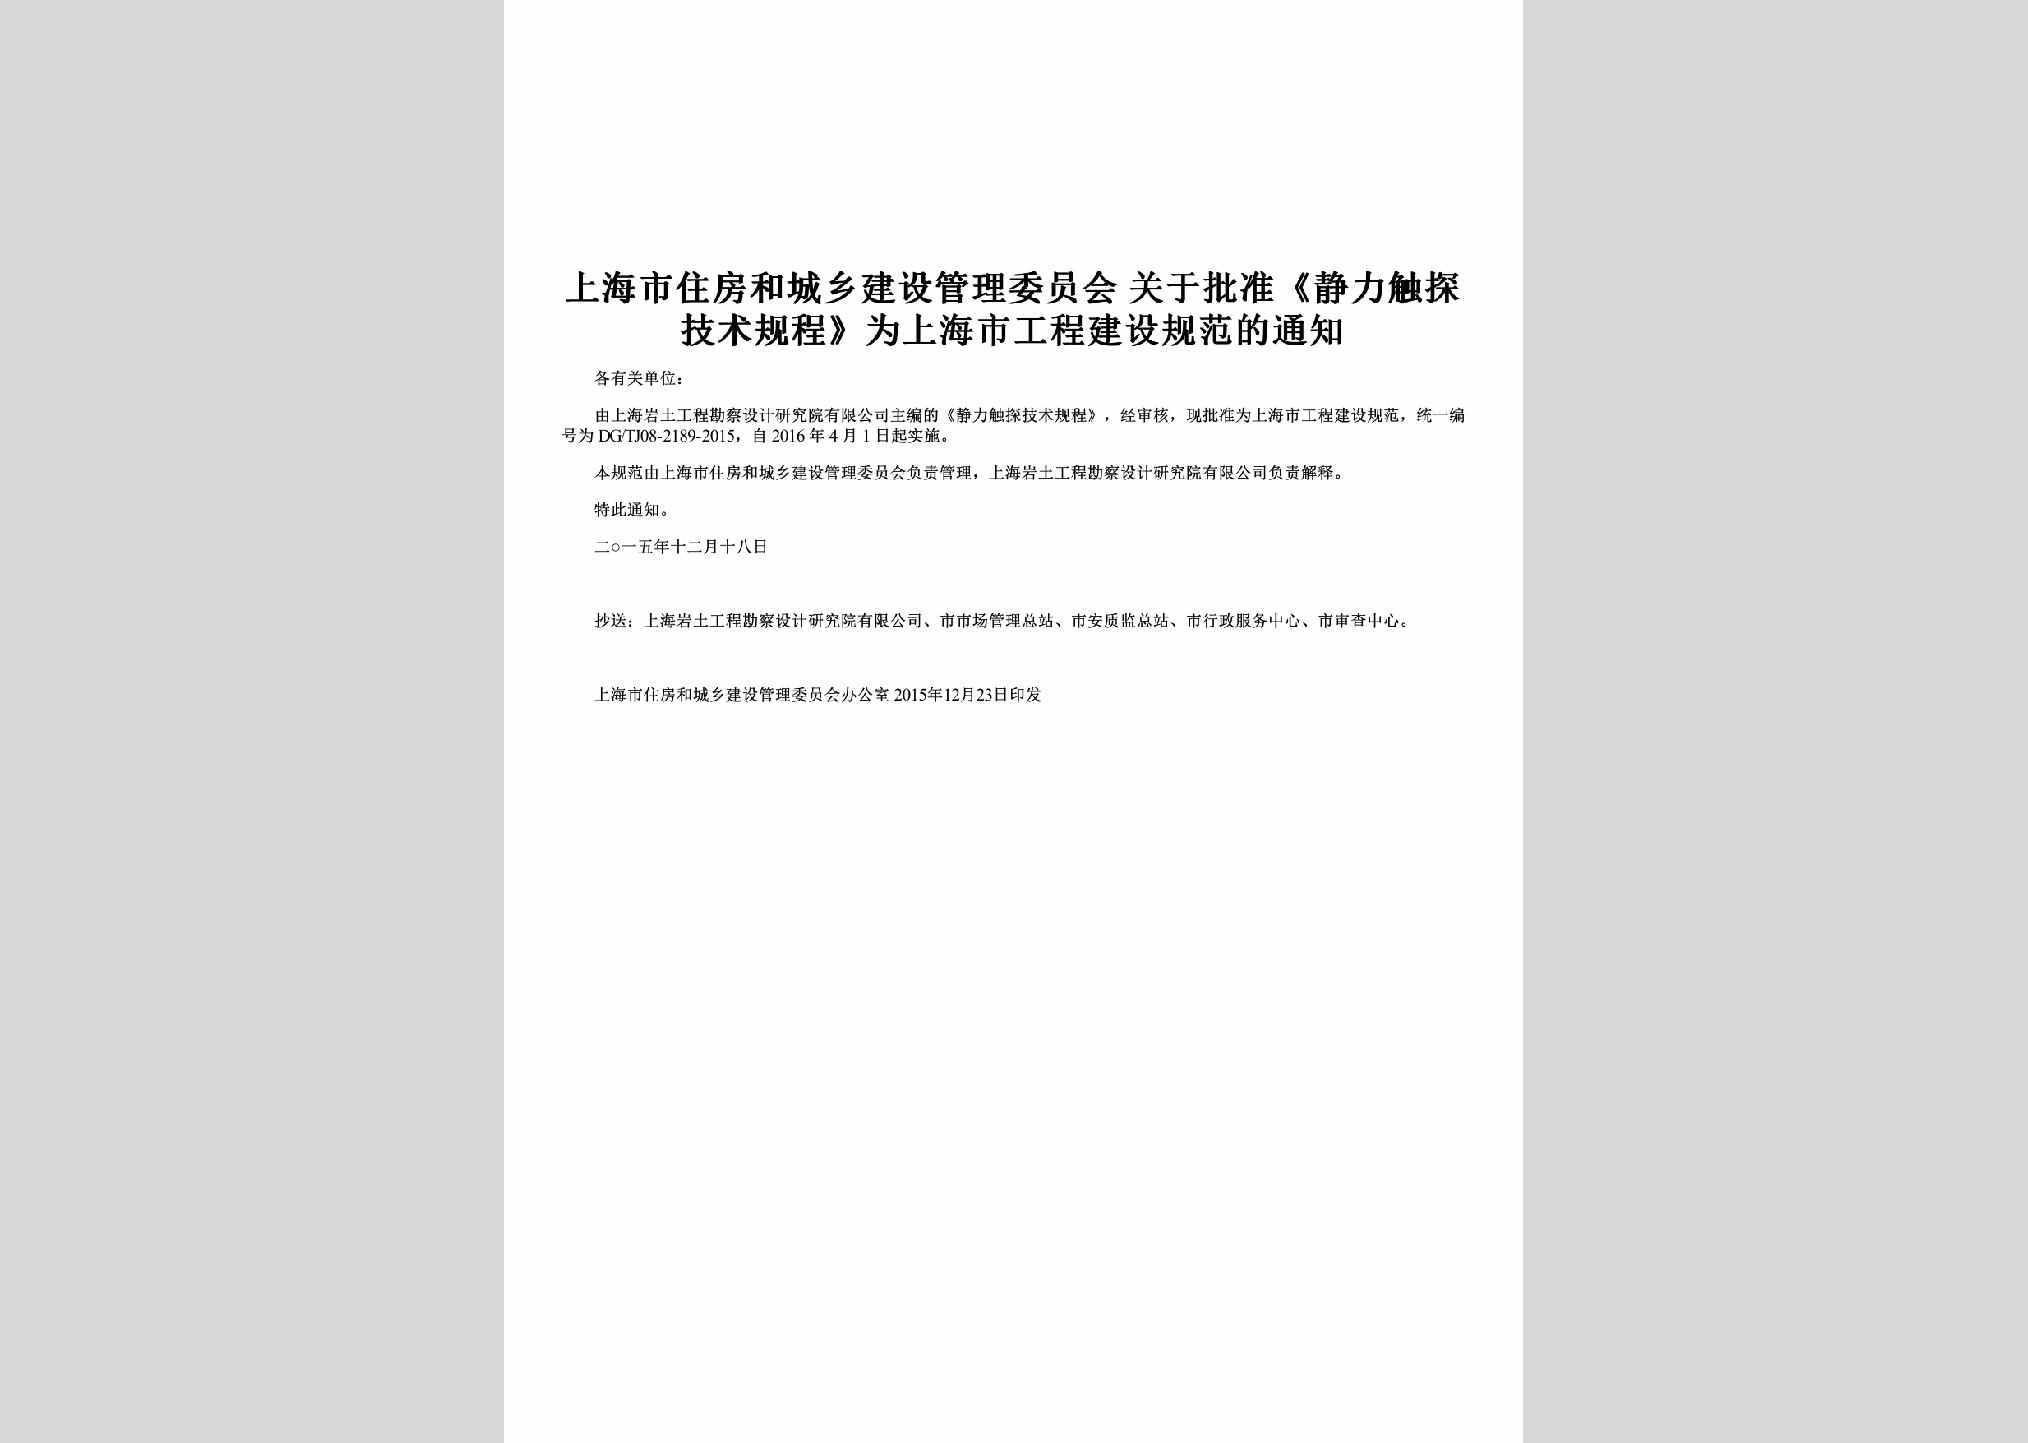 SH-GCJSGFTZ-2015：关于批准《静力触探技术规程》为上海市工程建设规范的通知